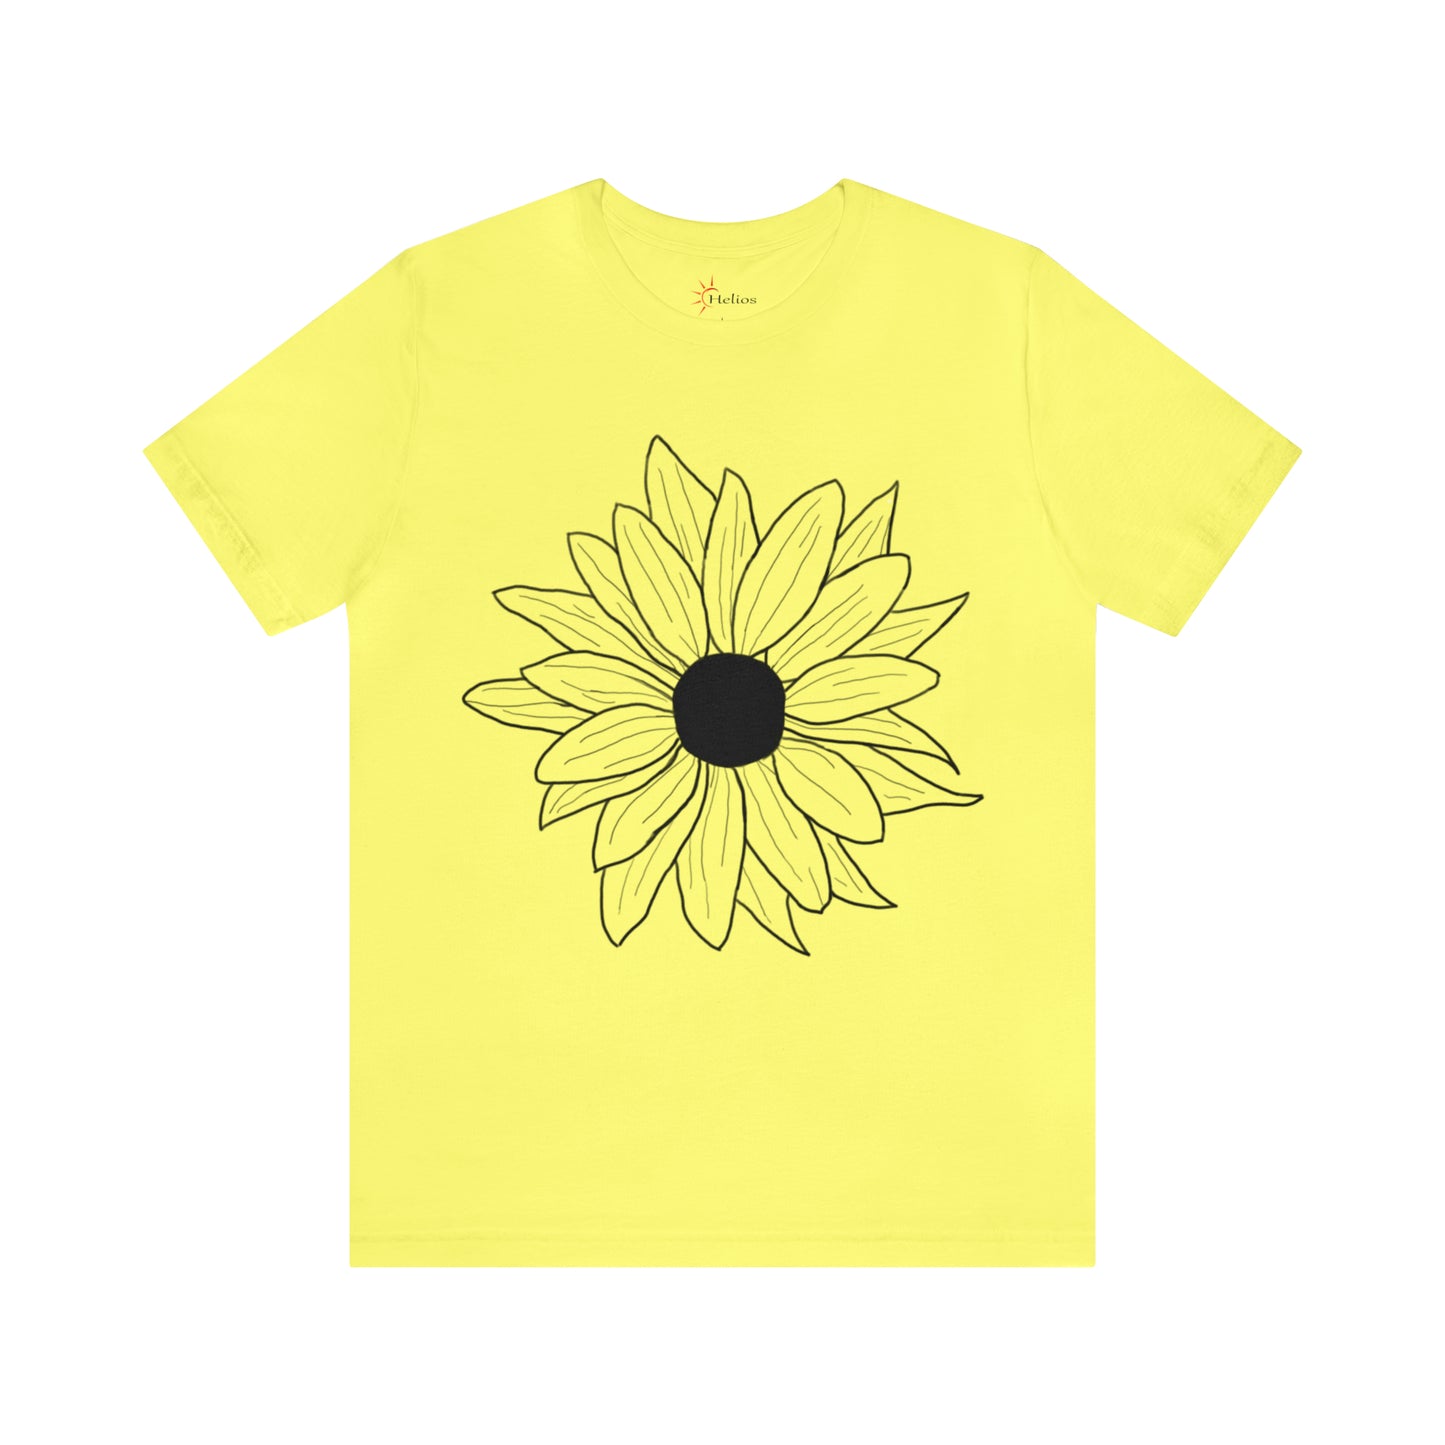 Daisey shirt, nature lover tshirt, hand-drawn, flower art, boho shirt, cottage core shirt, gift